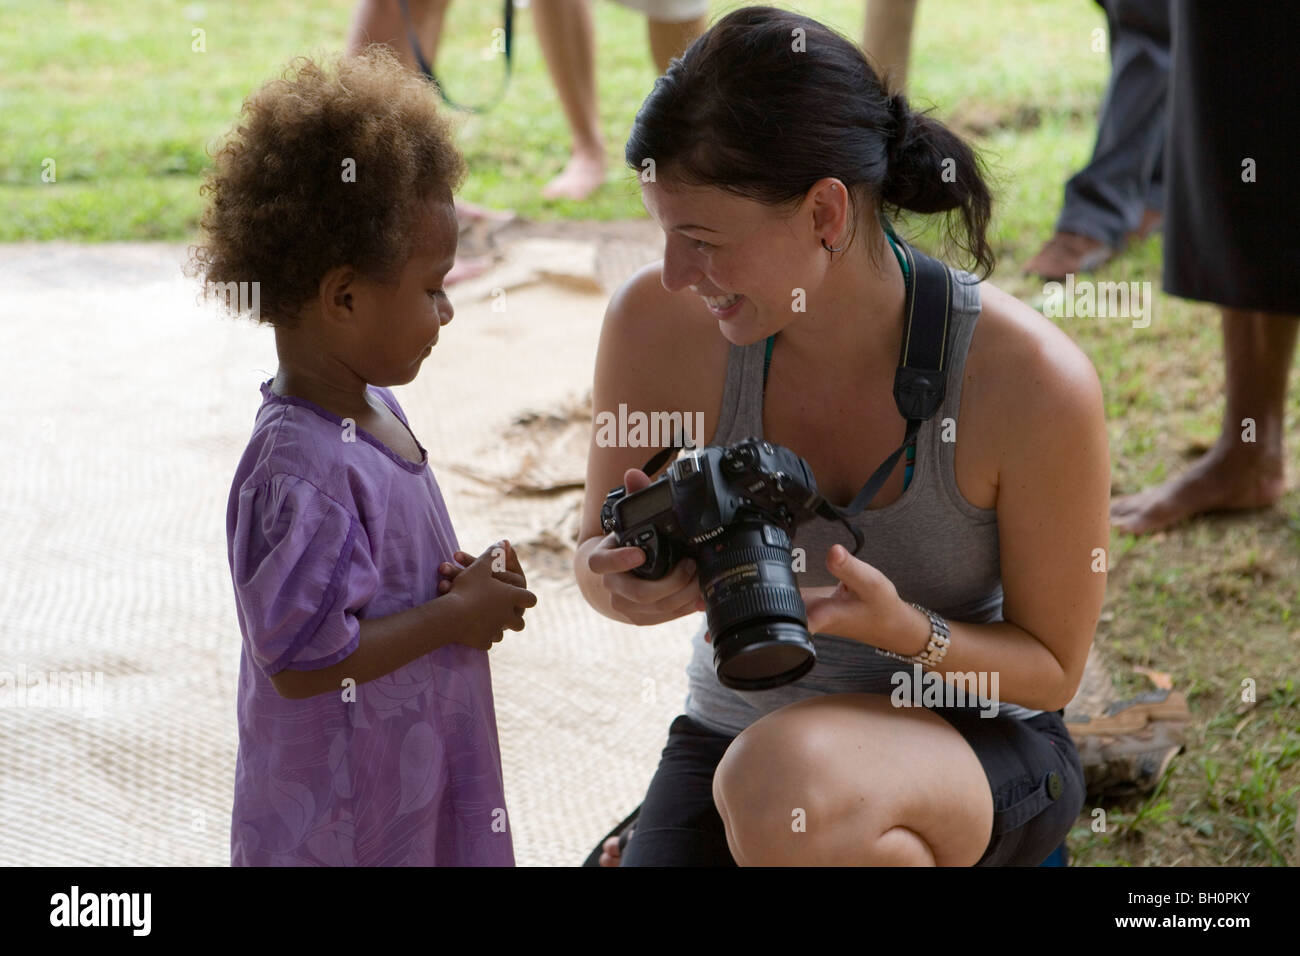 Young woman showing pictures on her camera to fijian child, Naidi, Vanua Levu, Fiji Islands, South Pacific, Oceania Stock Photo